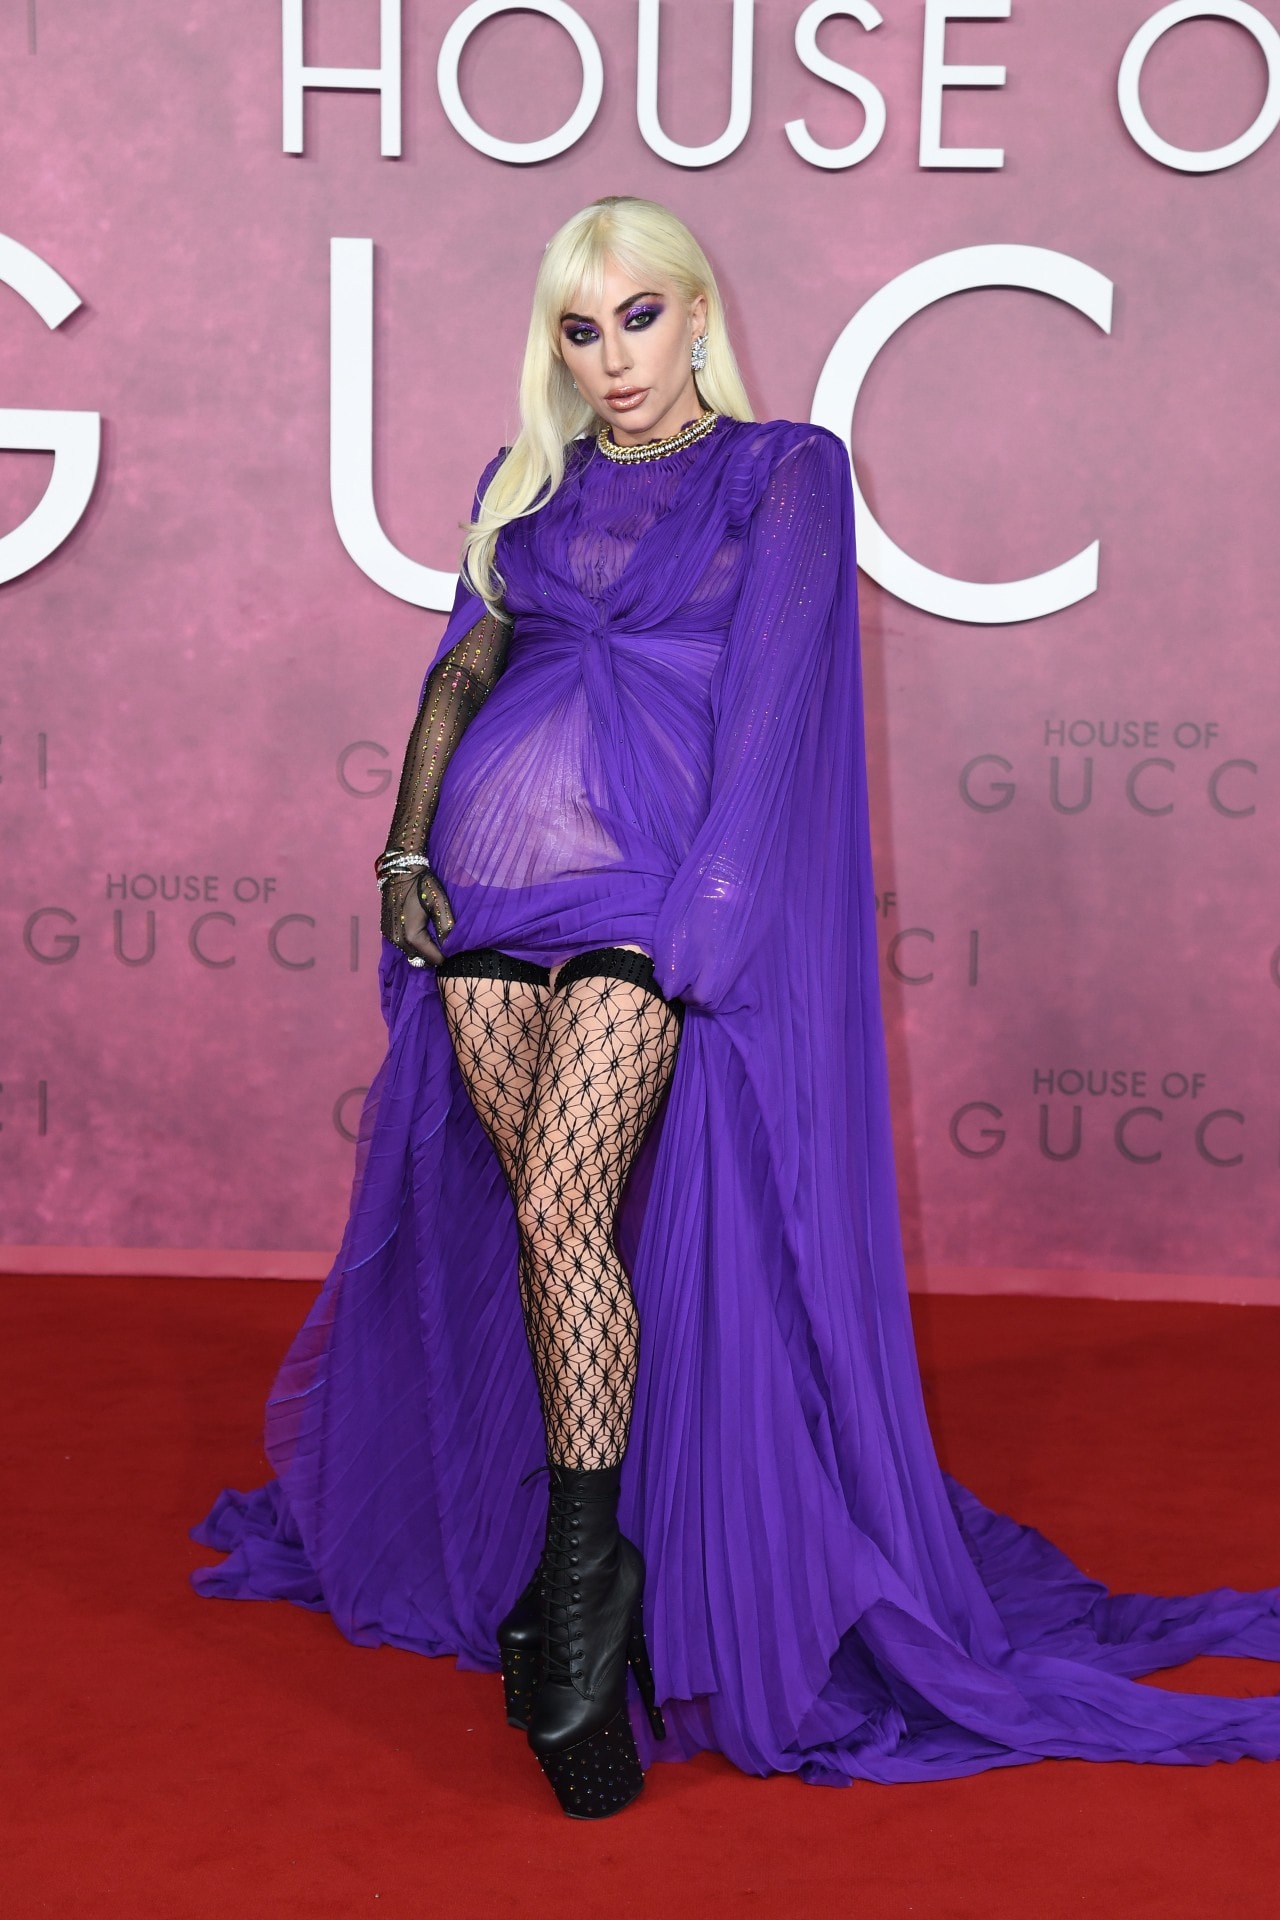 lady gaga purple gucci dress house of gucci london premiere red carpet film